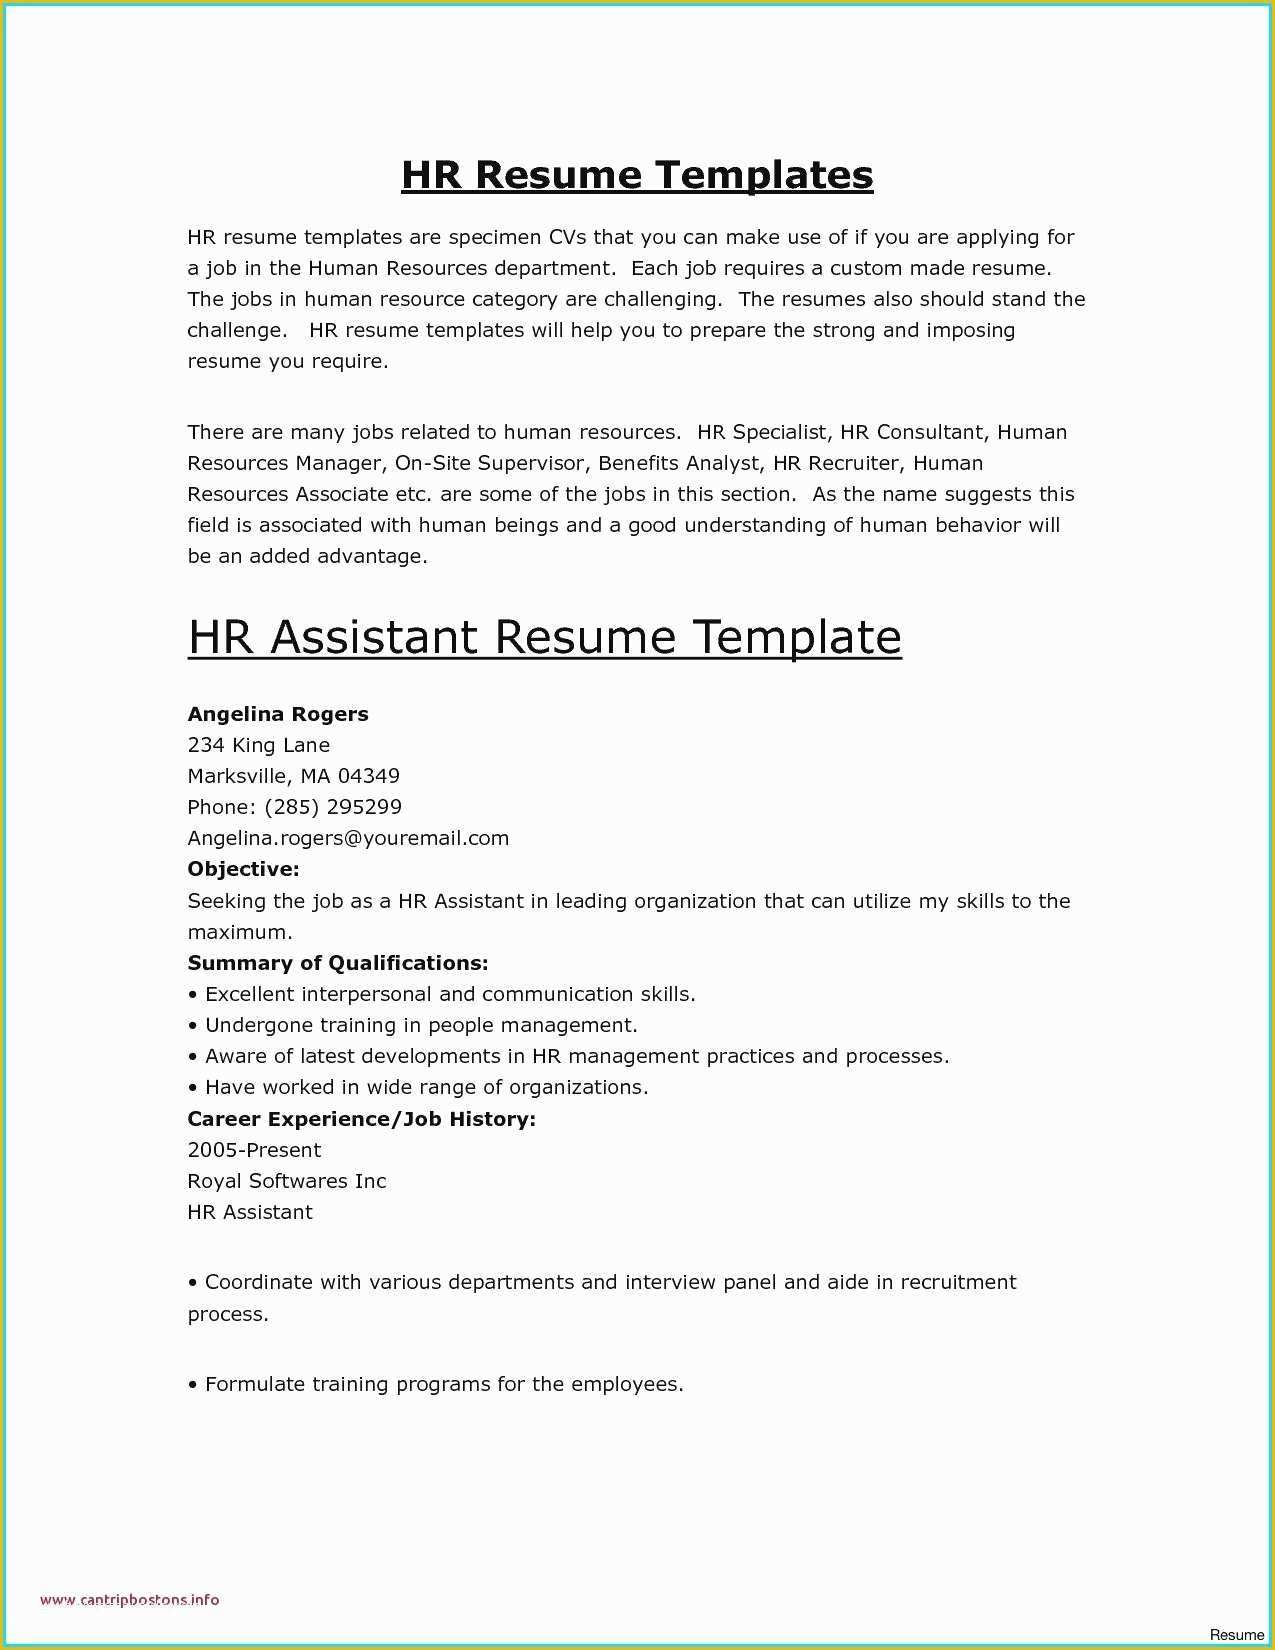 Free Resume Wizard Templates Of Microsoft Templates Resume Wizard theailene